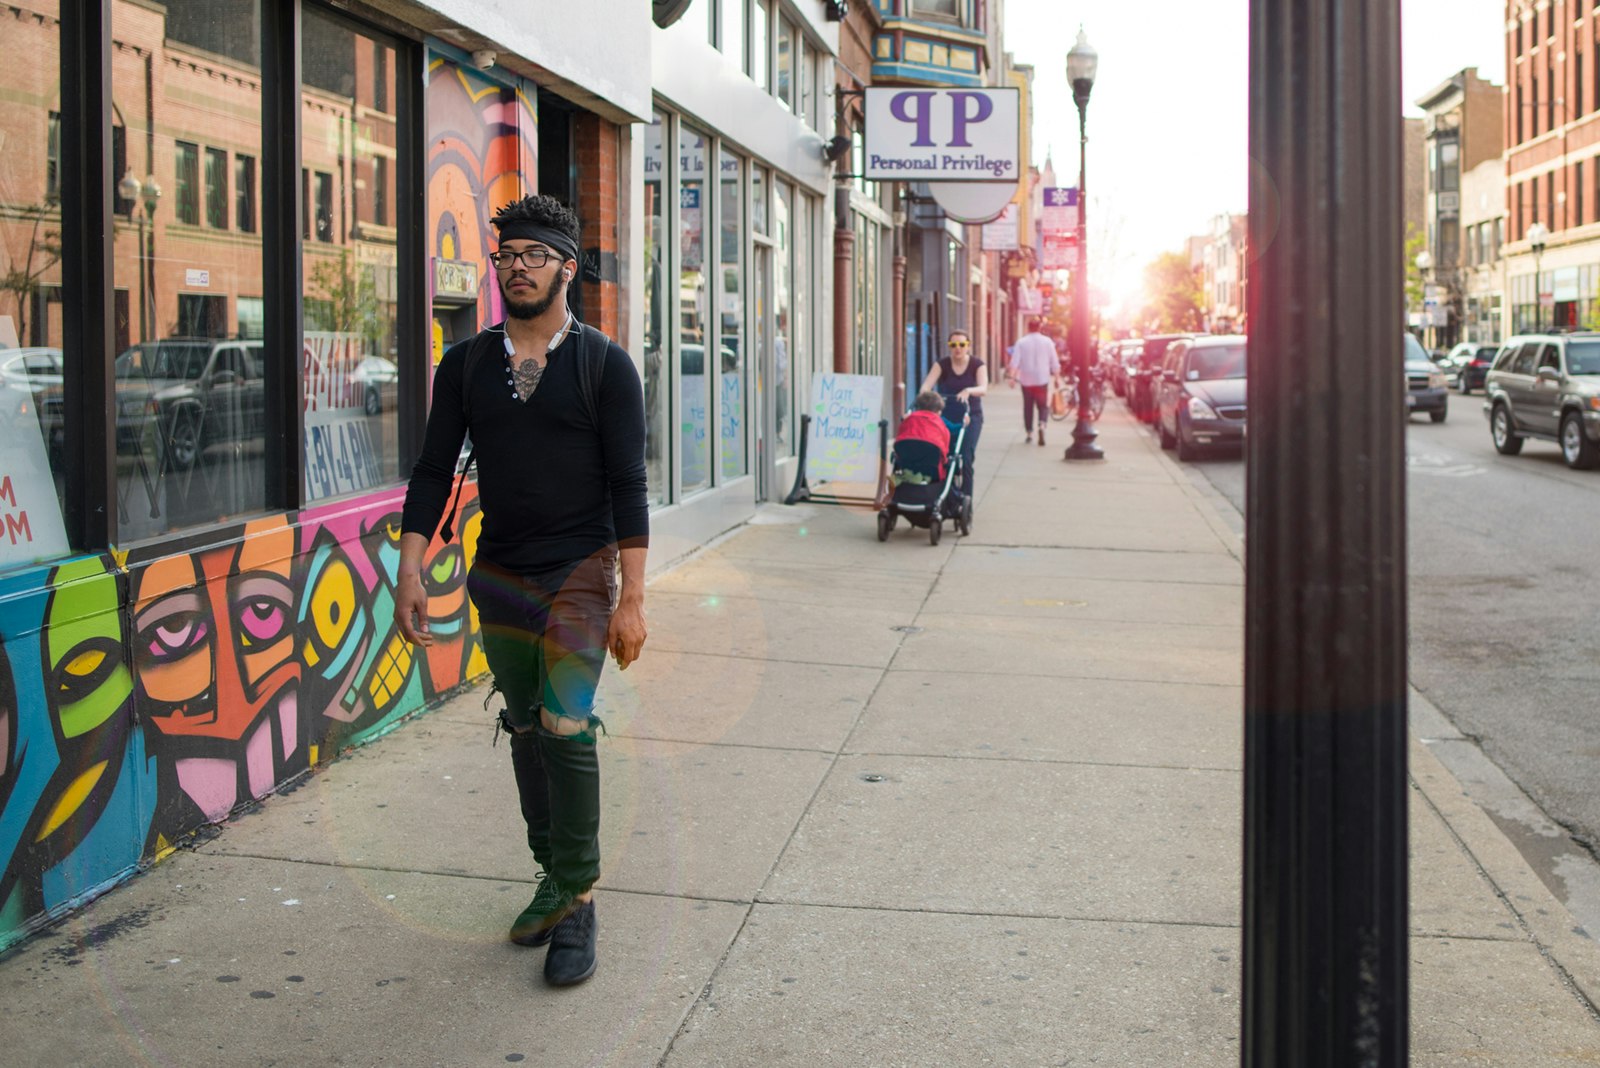 young man walks along a neighborhood street past a colorful shop facade as the sun sets